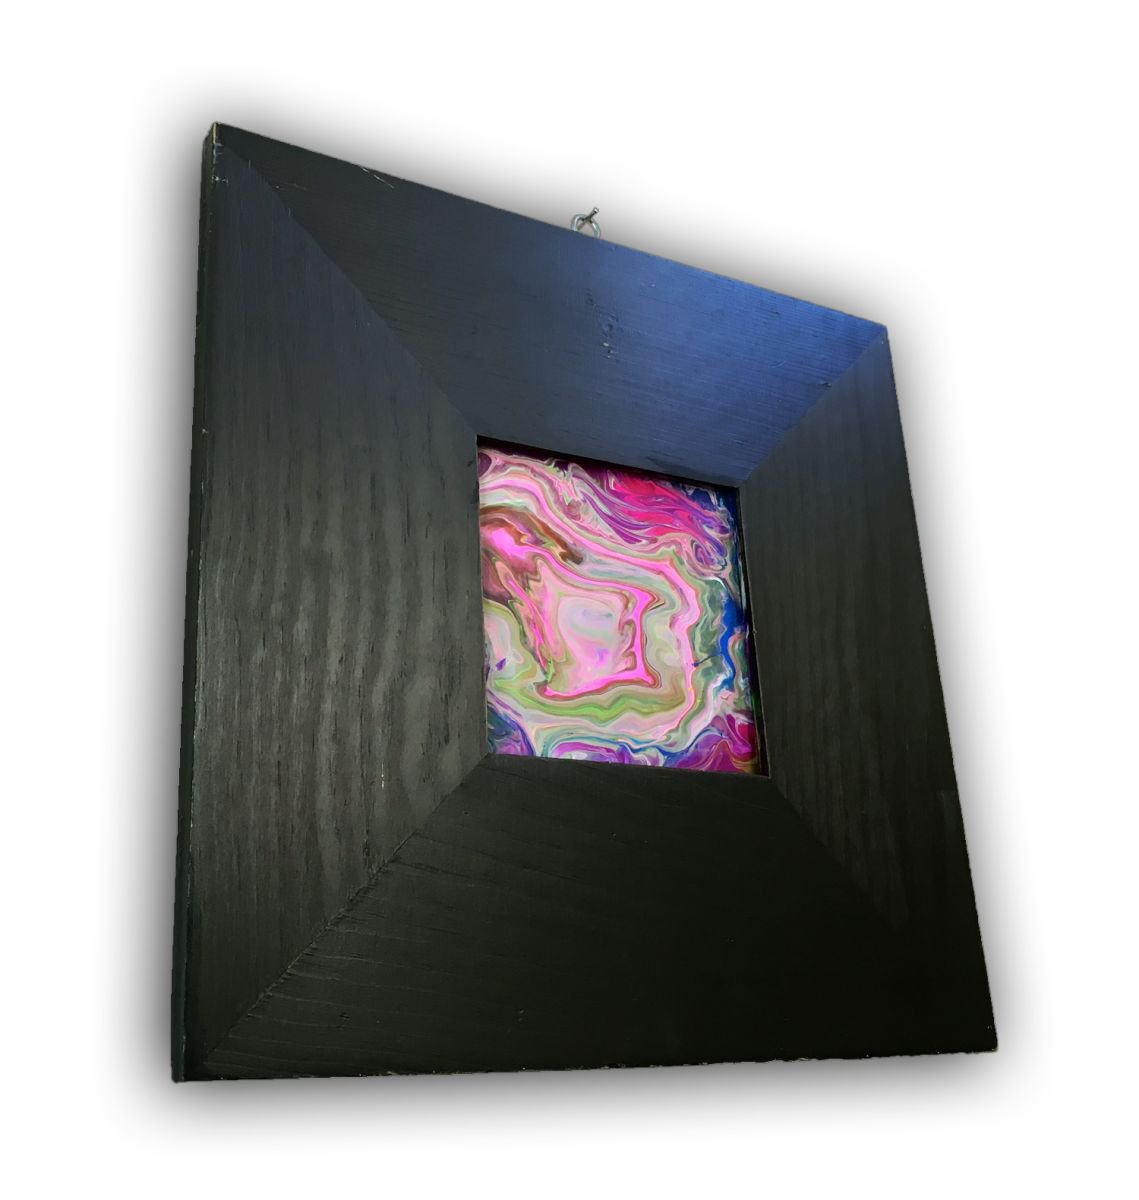 Electric Swirl - Original PMS Micro Painting on glass - 10 x 10 by Preston M. Smith (PMS)